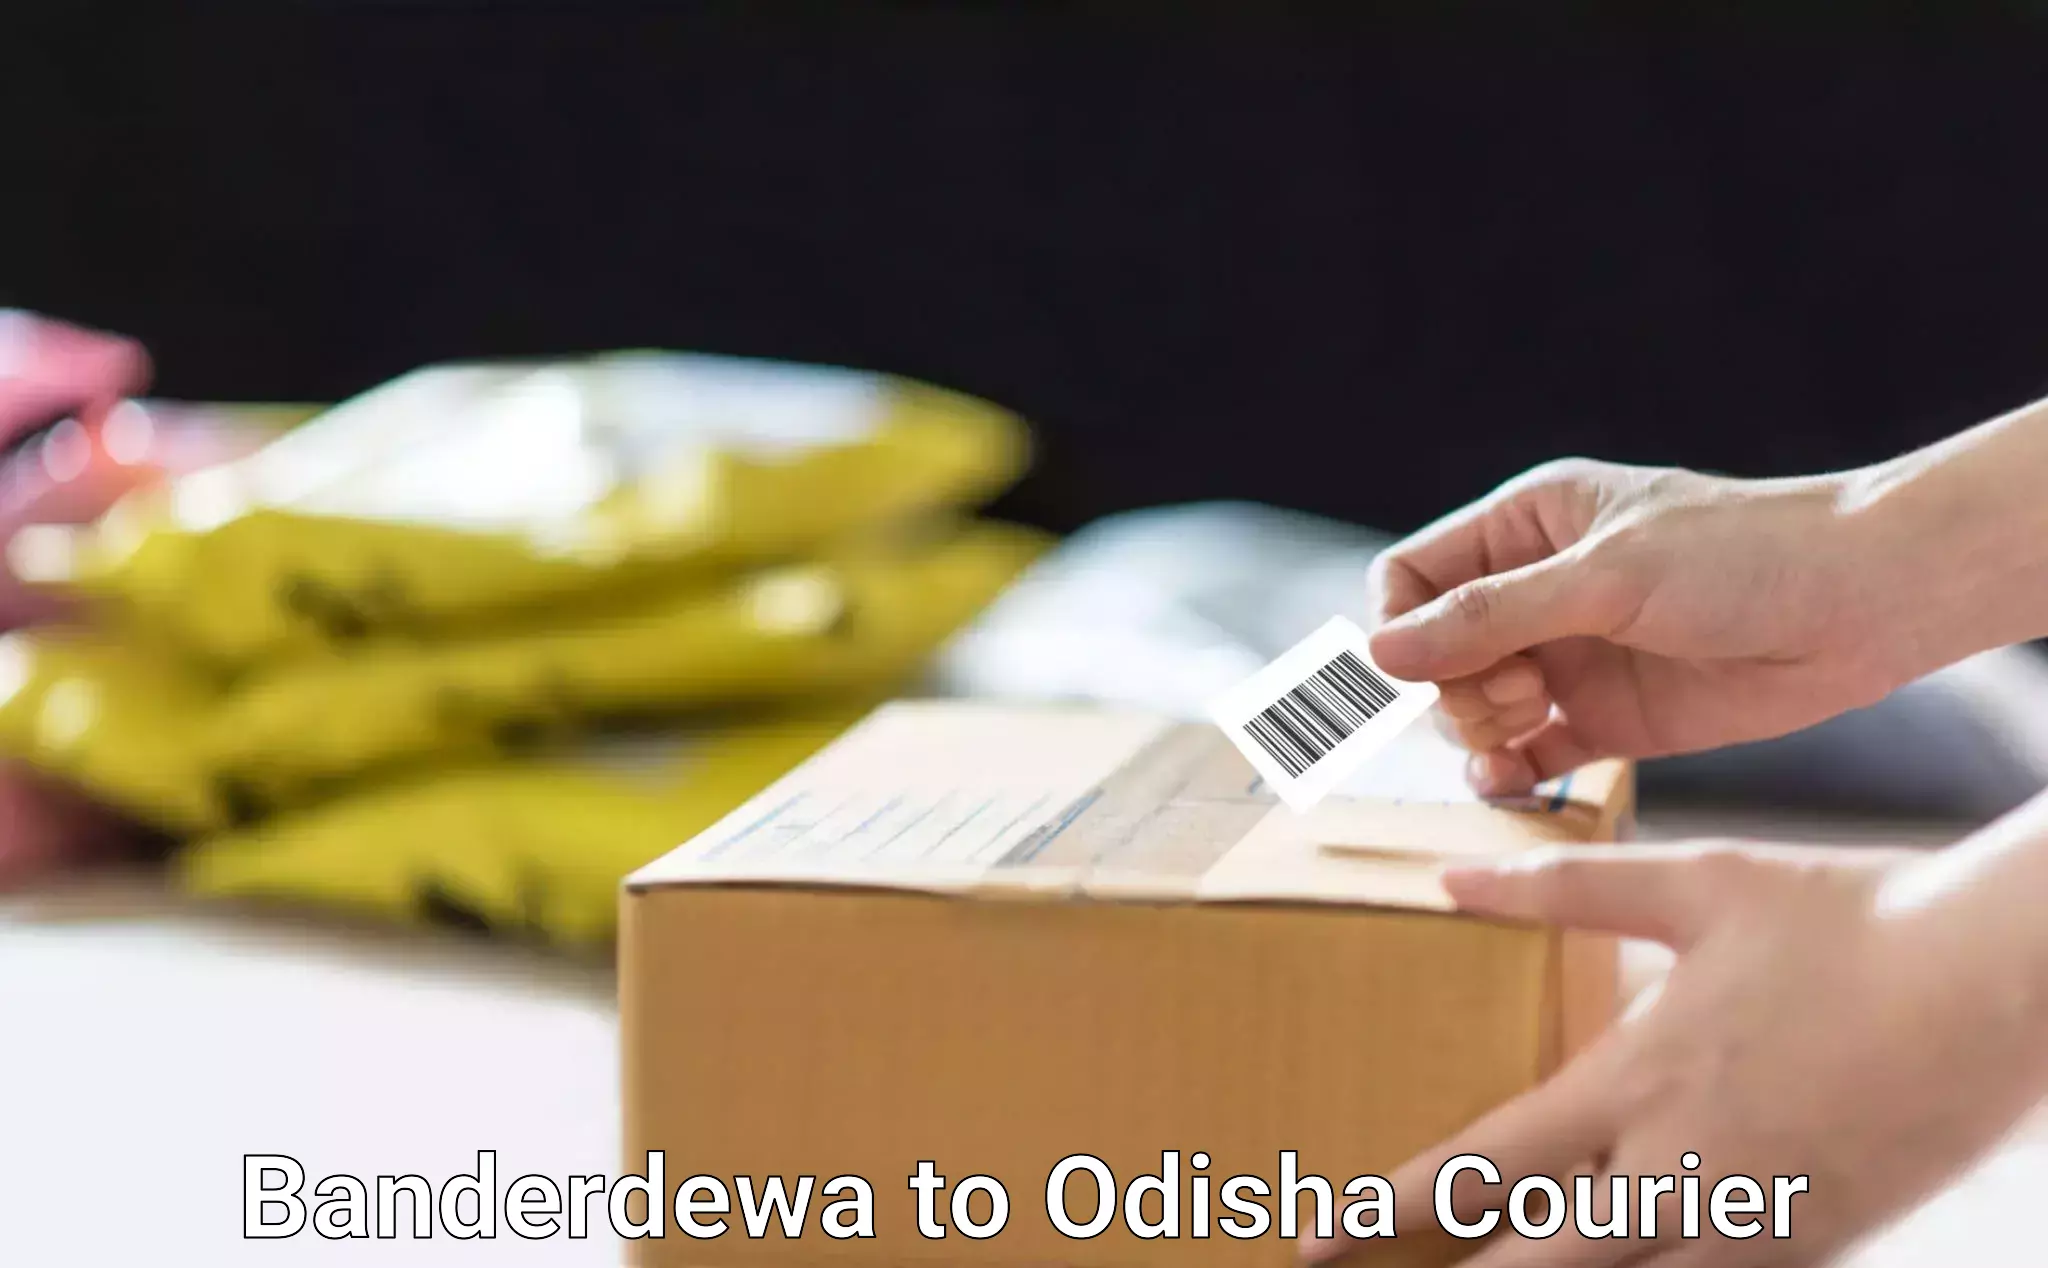 Courier service innovation Banderdewa to Odisha